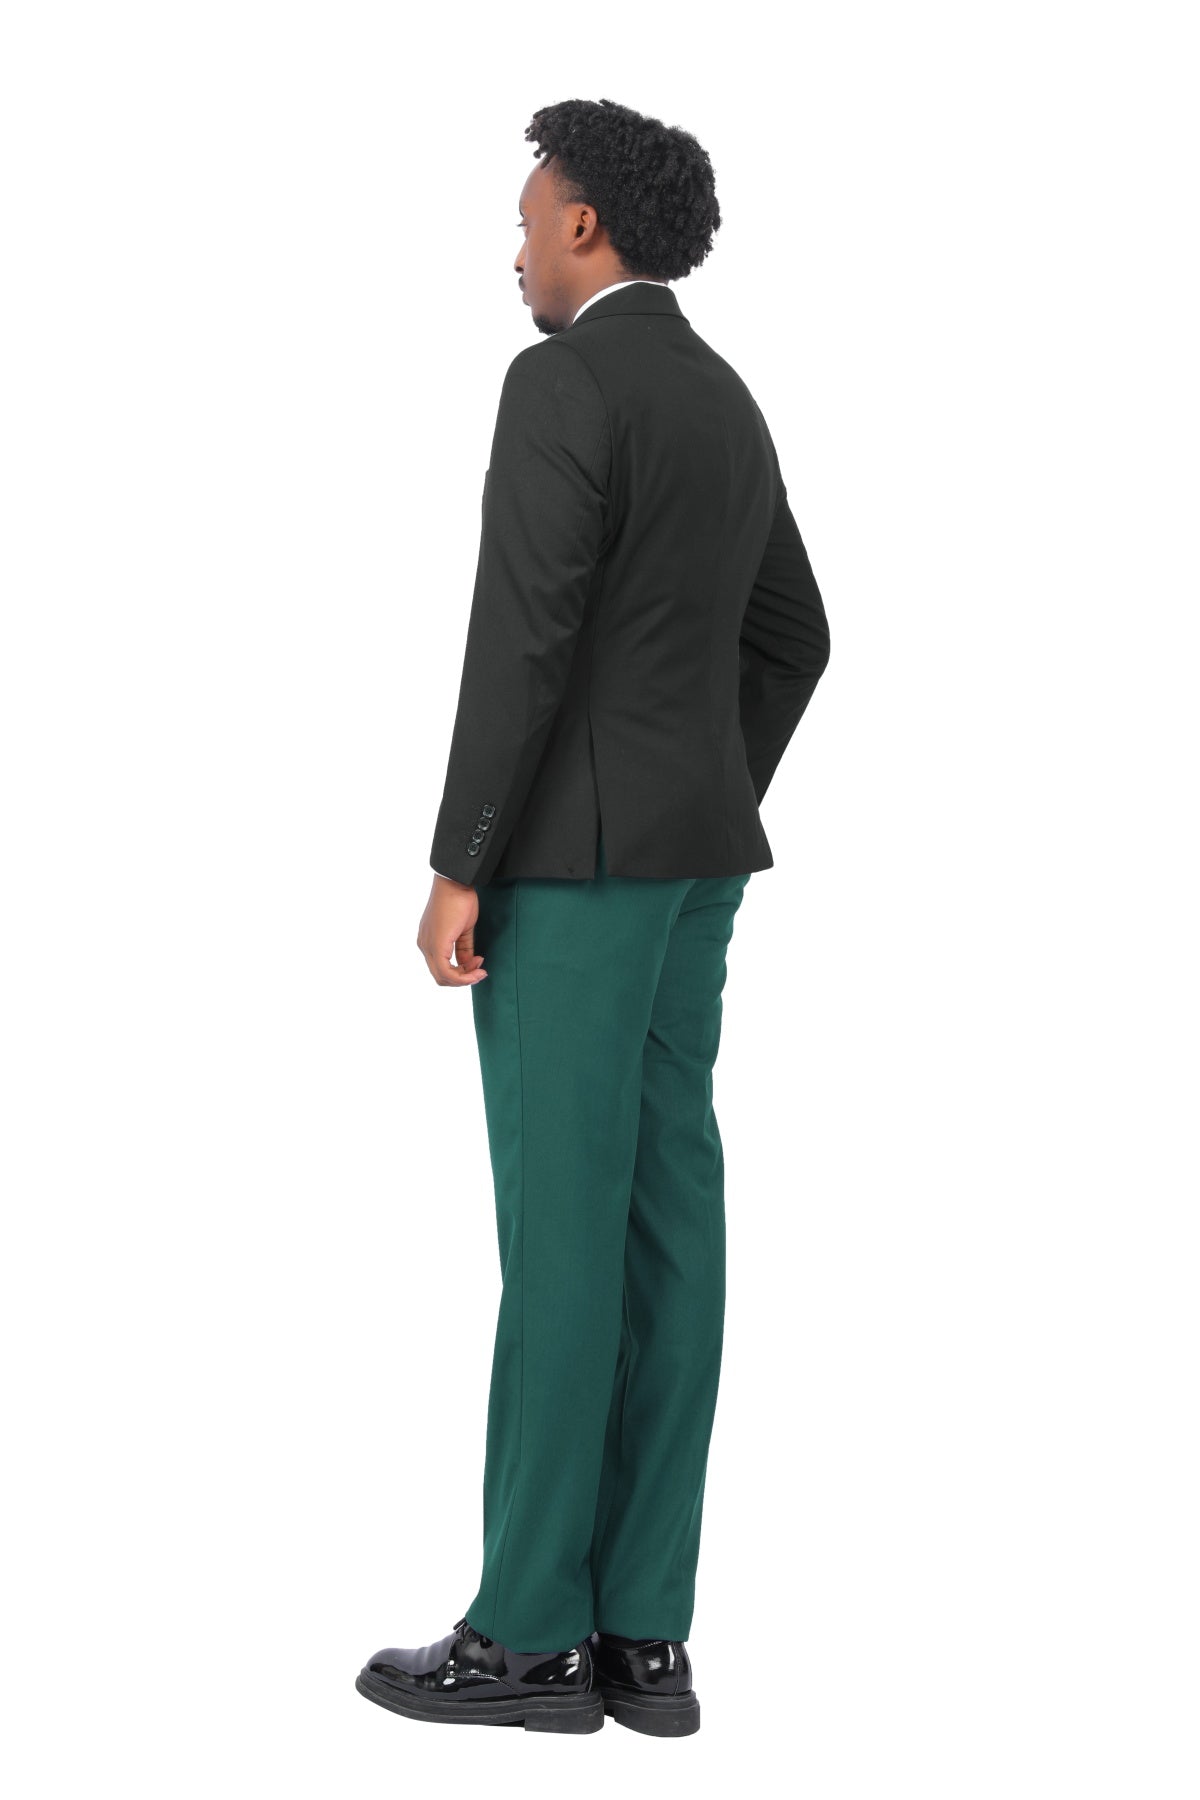 Men's 3-Piece Fashion One Button Color-Blocking Suit Dark Green